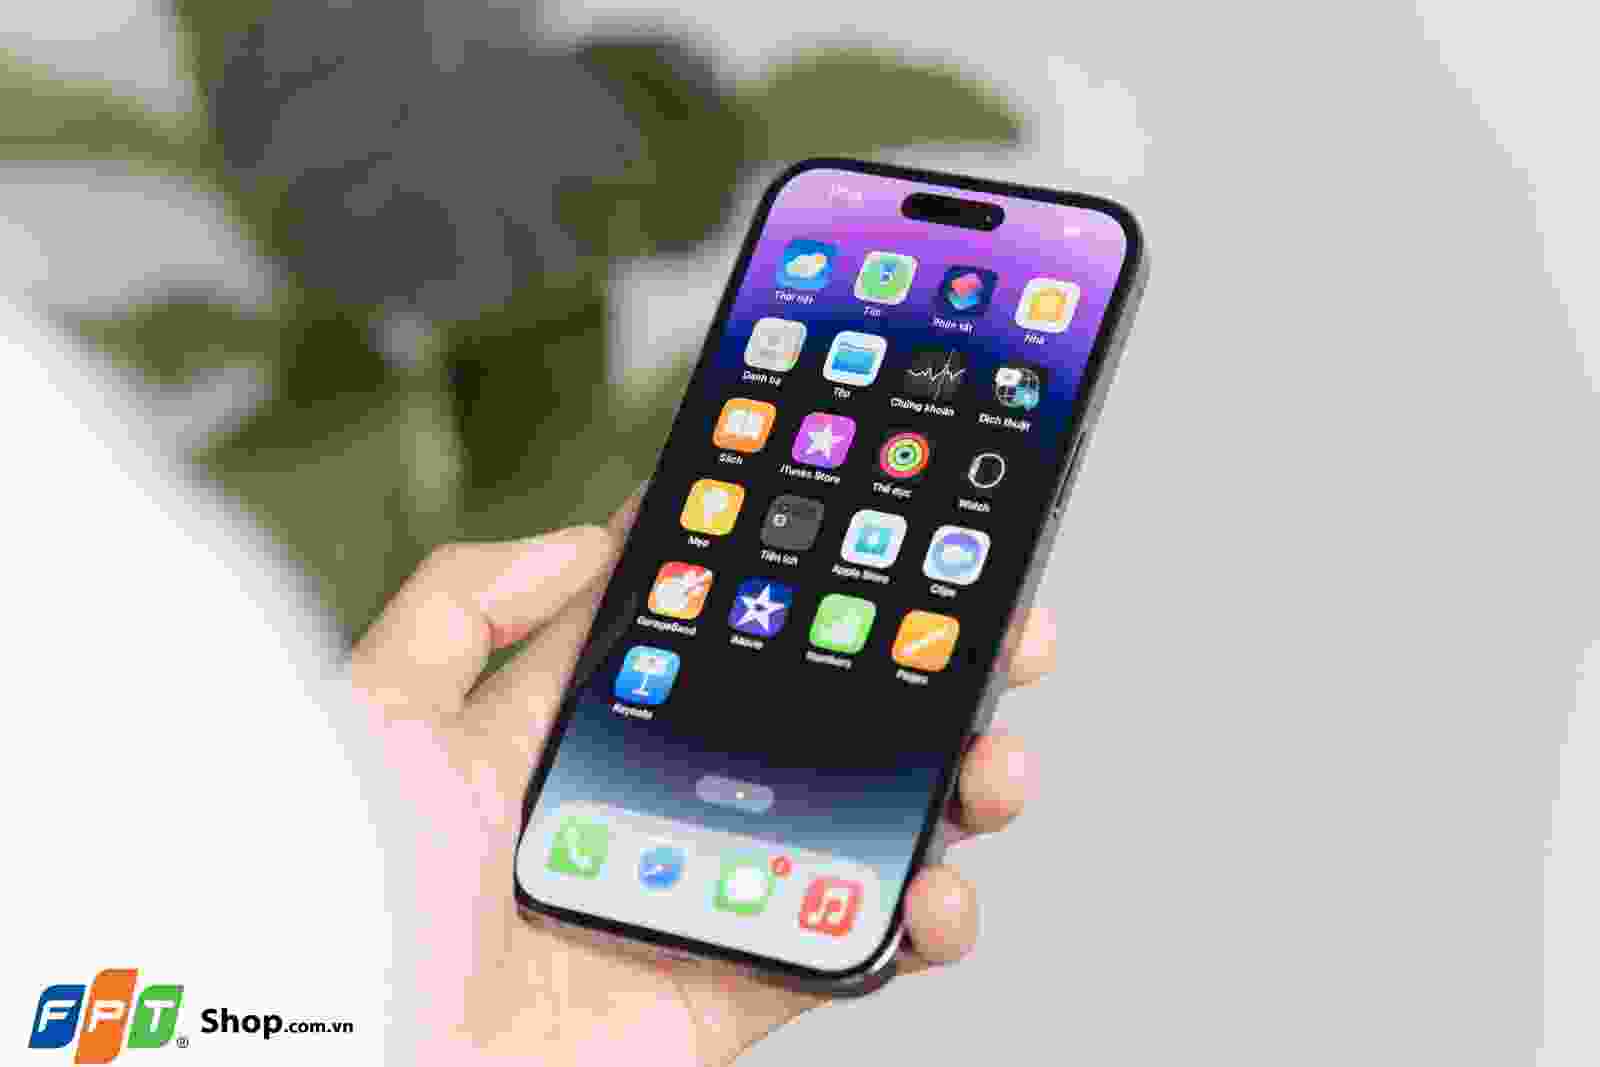 Hướng dẫn kiểm tra IMEI iPhone – Check Imei iPhone